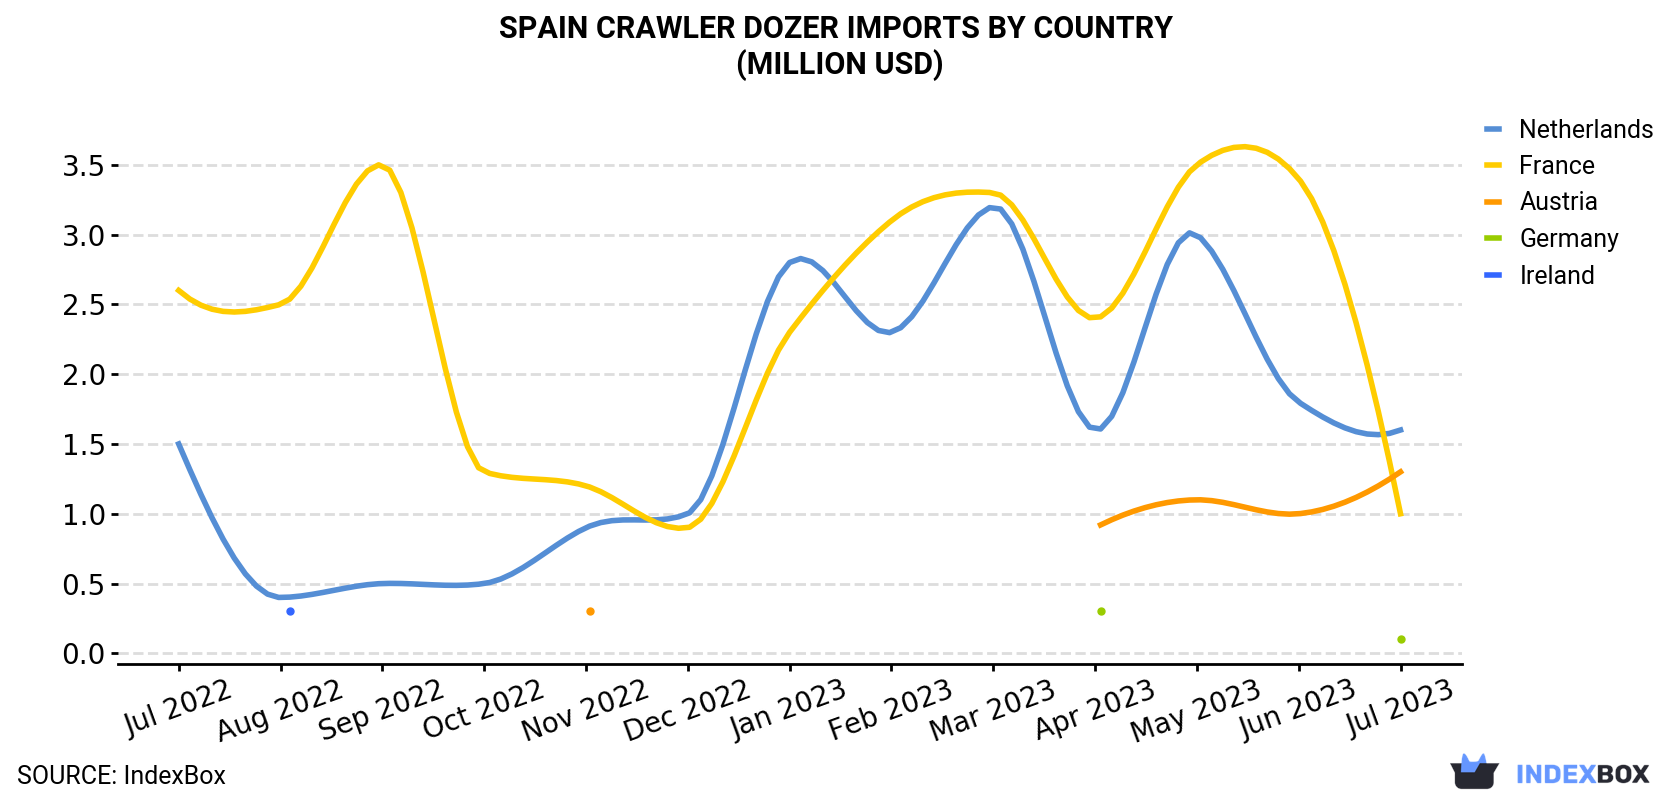 Spain Crawler Dozer Imports By Country (Million USD)